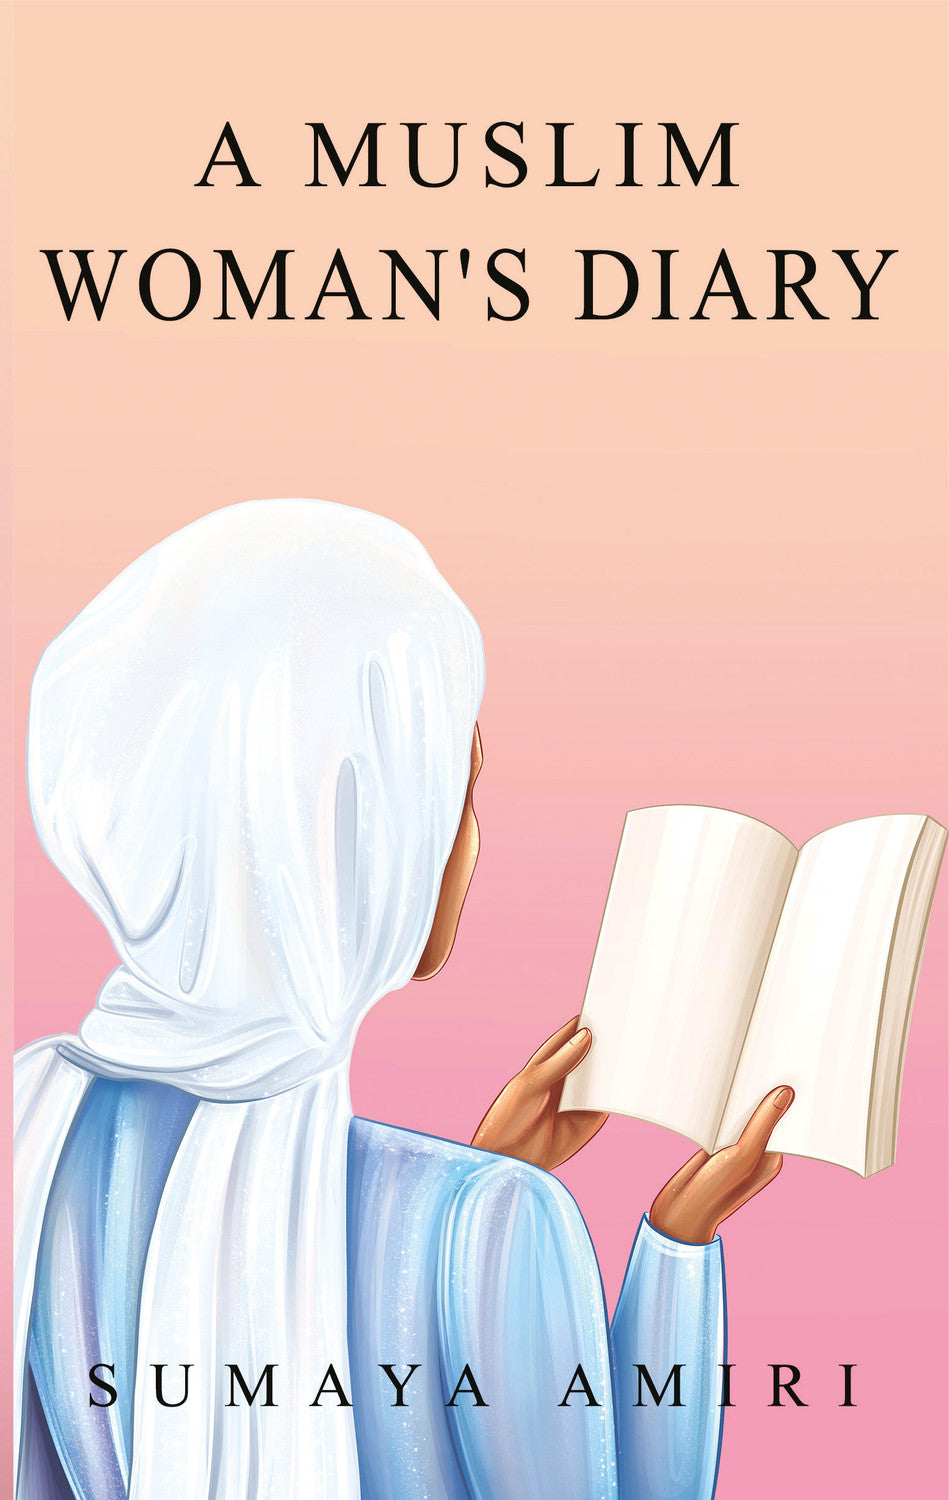 A Muslim Womans Diary